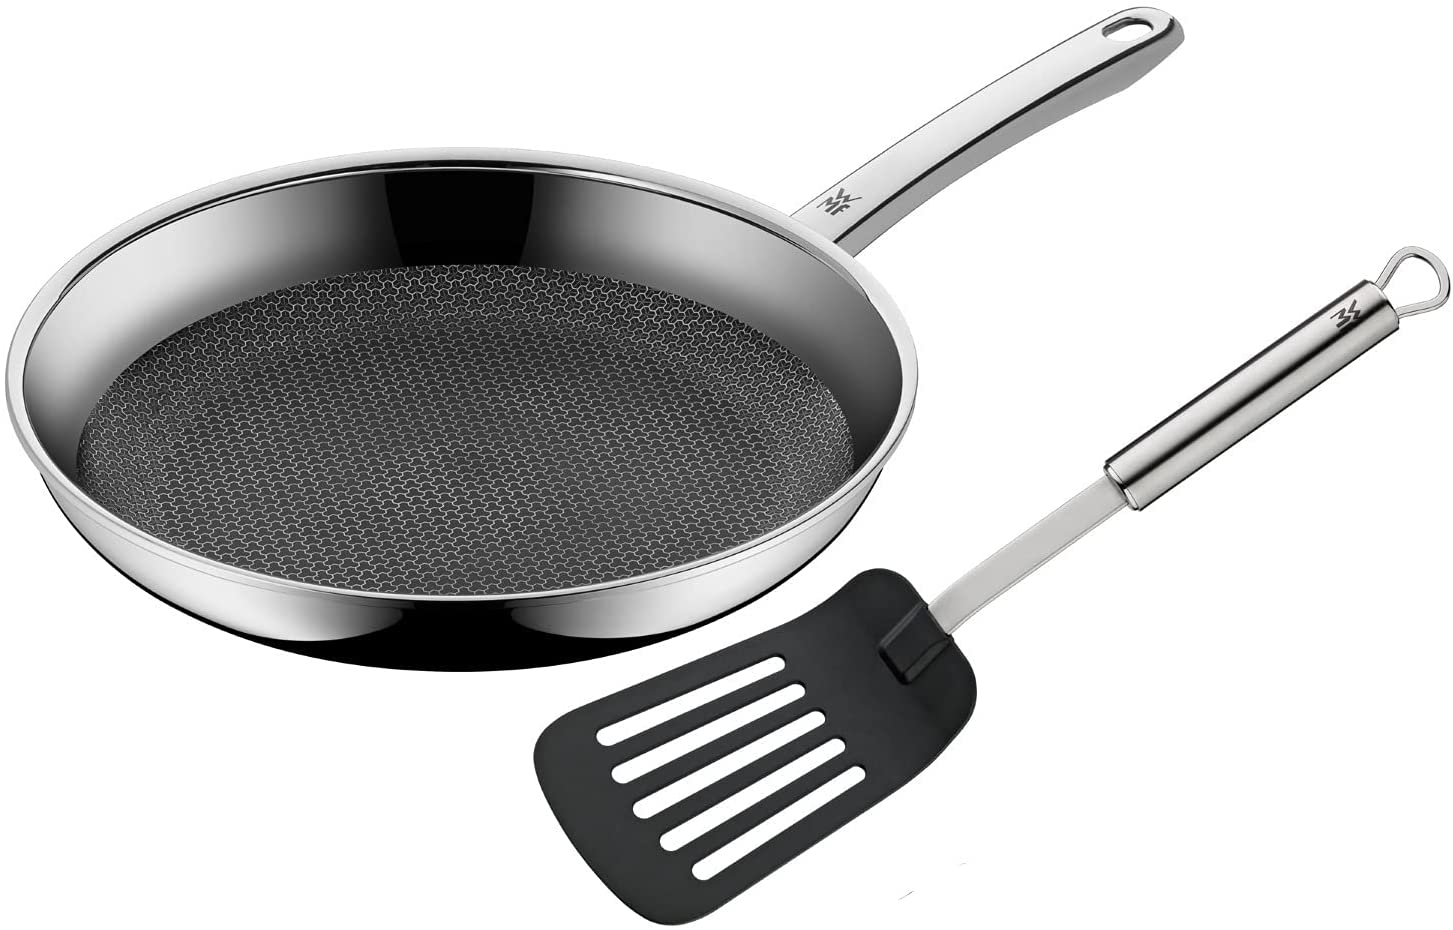 WMF Profi Resist frying pan.